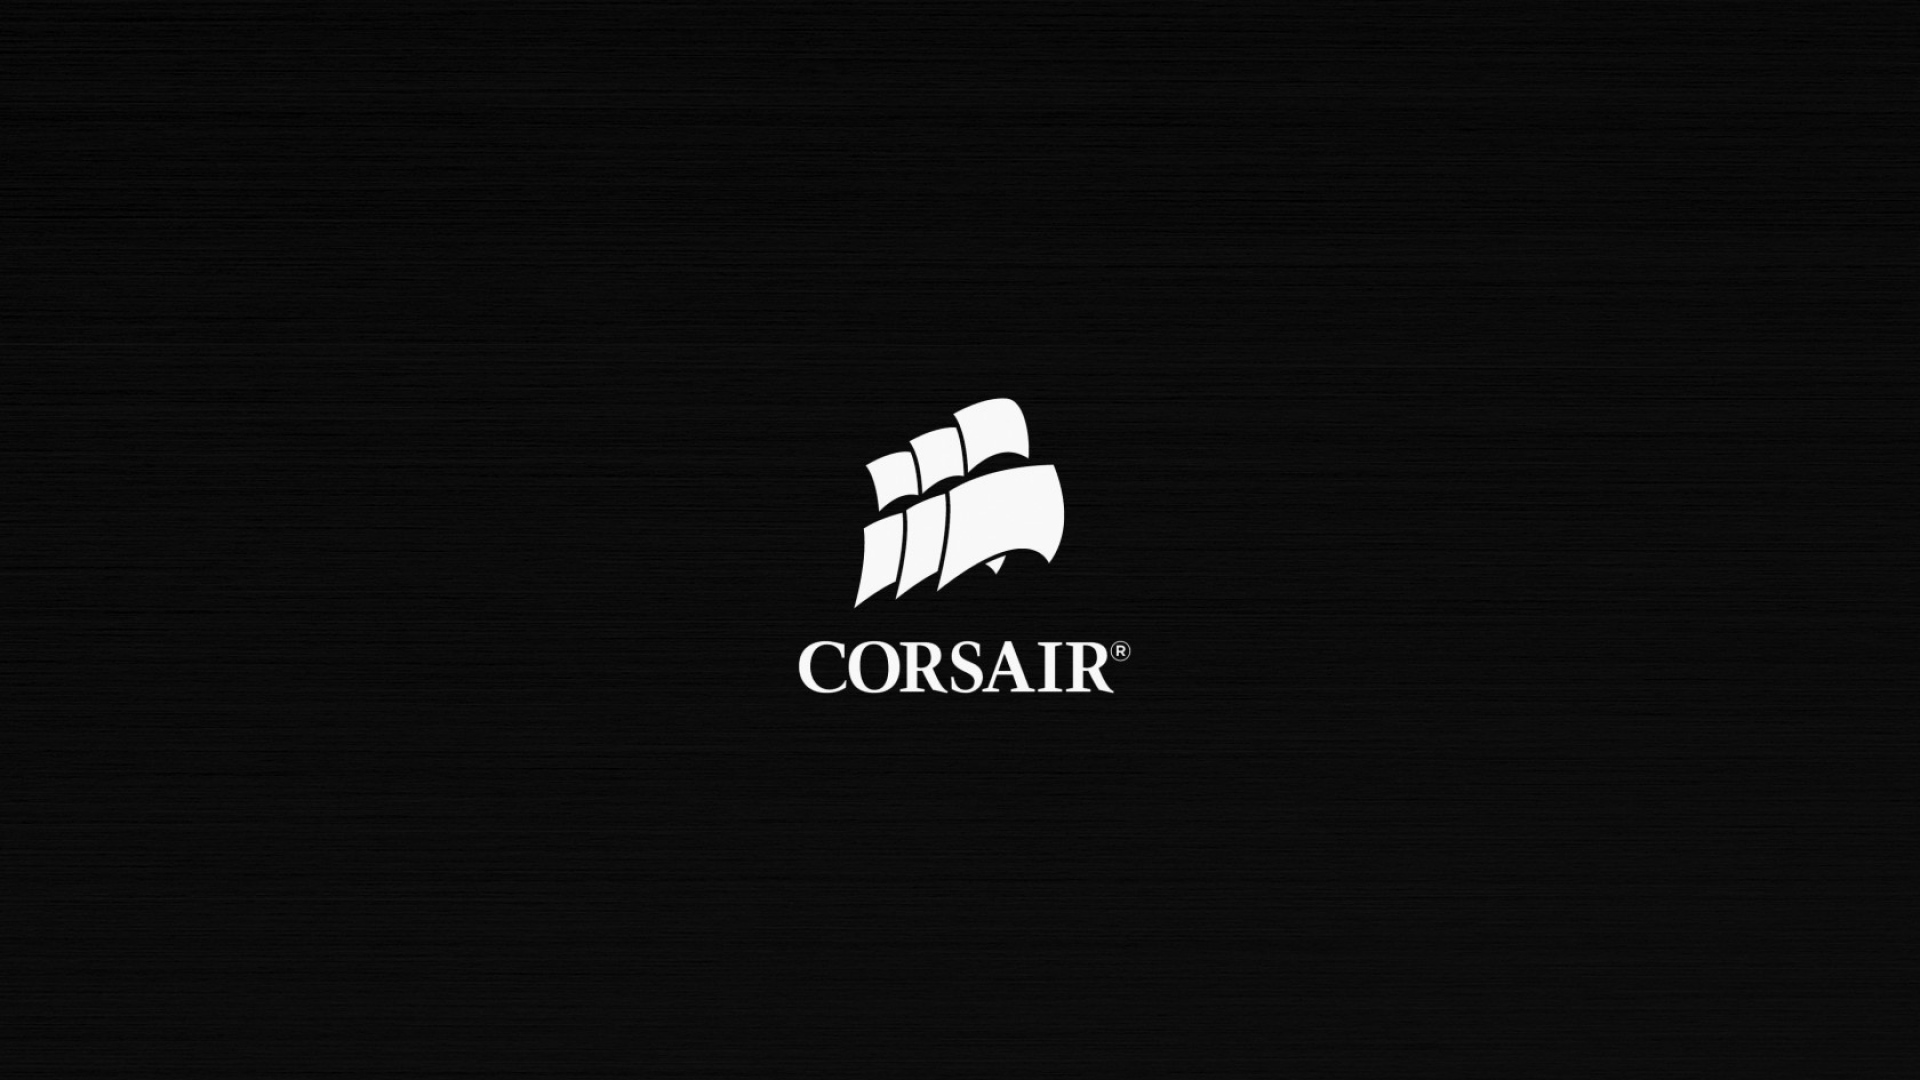 Corsair Logo Hi Tech Brand Wallpaper Background Full HD 1080p